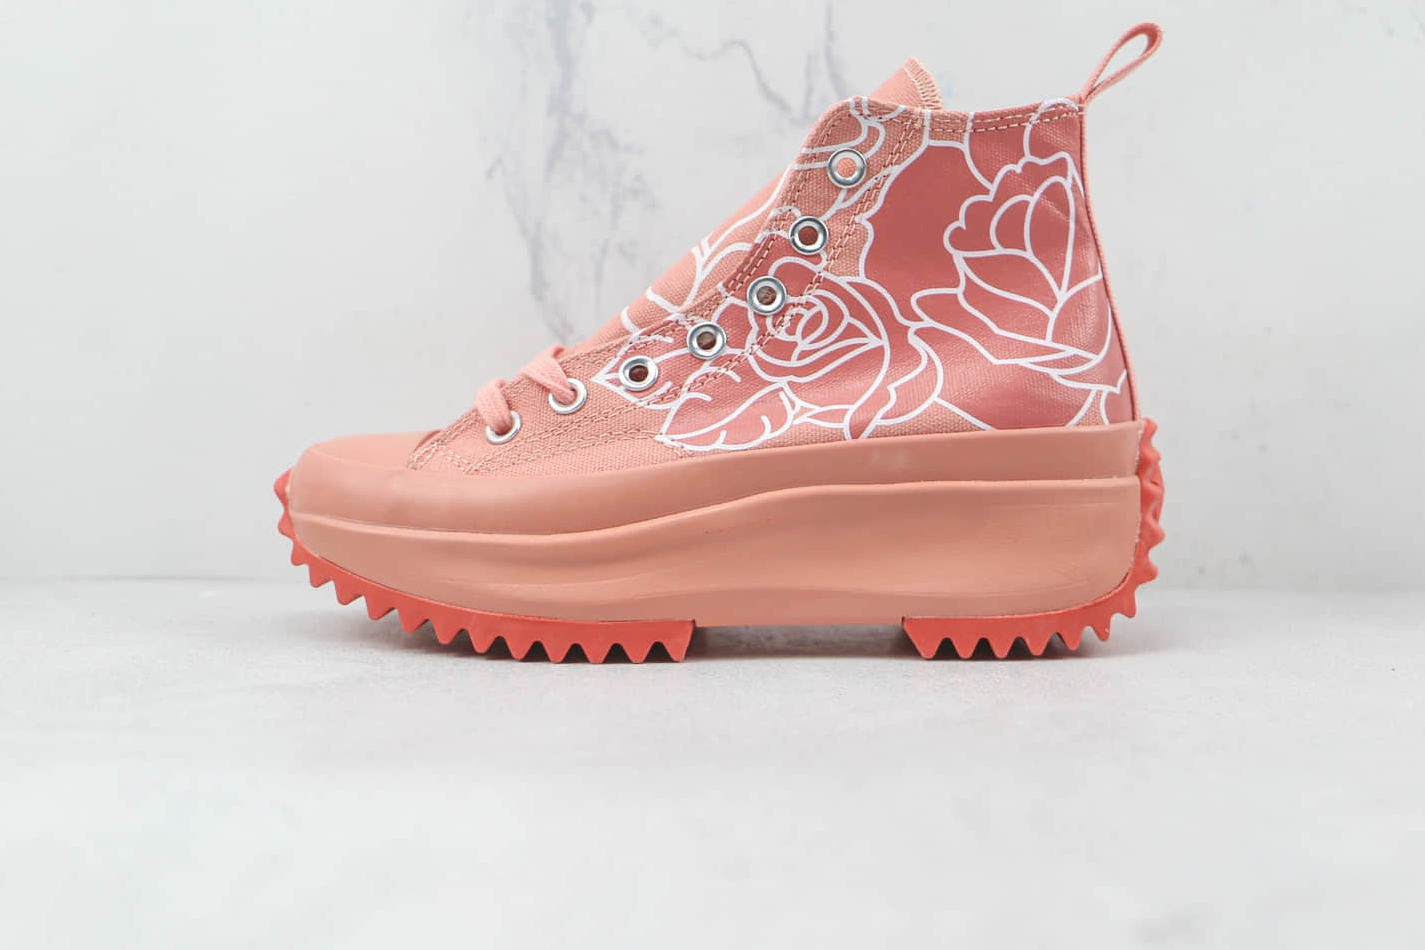 Converse Run Star Hike Natasha Cloud Floral Pink Quartz 571877C: Elevate Your Style with a Feminine Flair